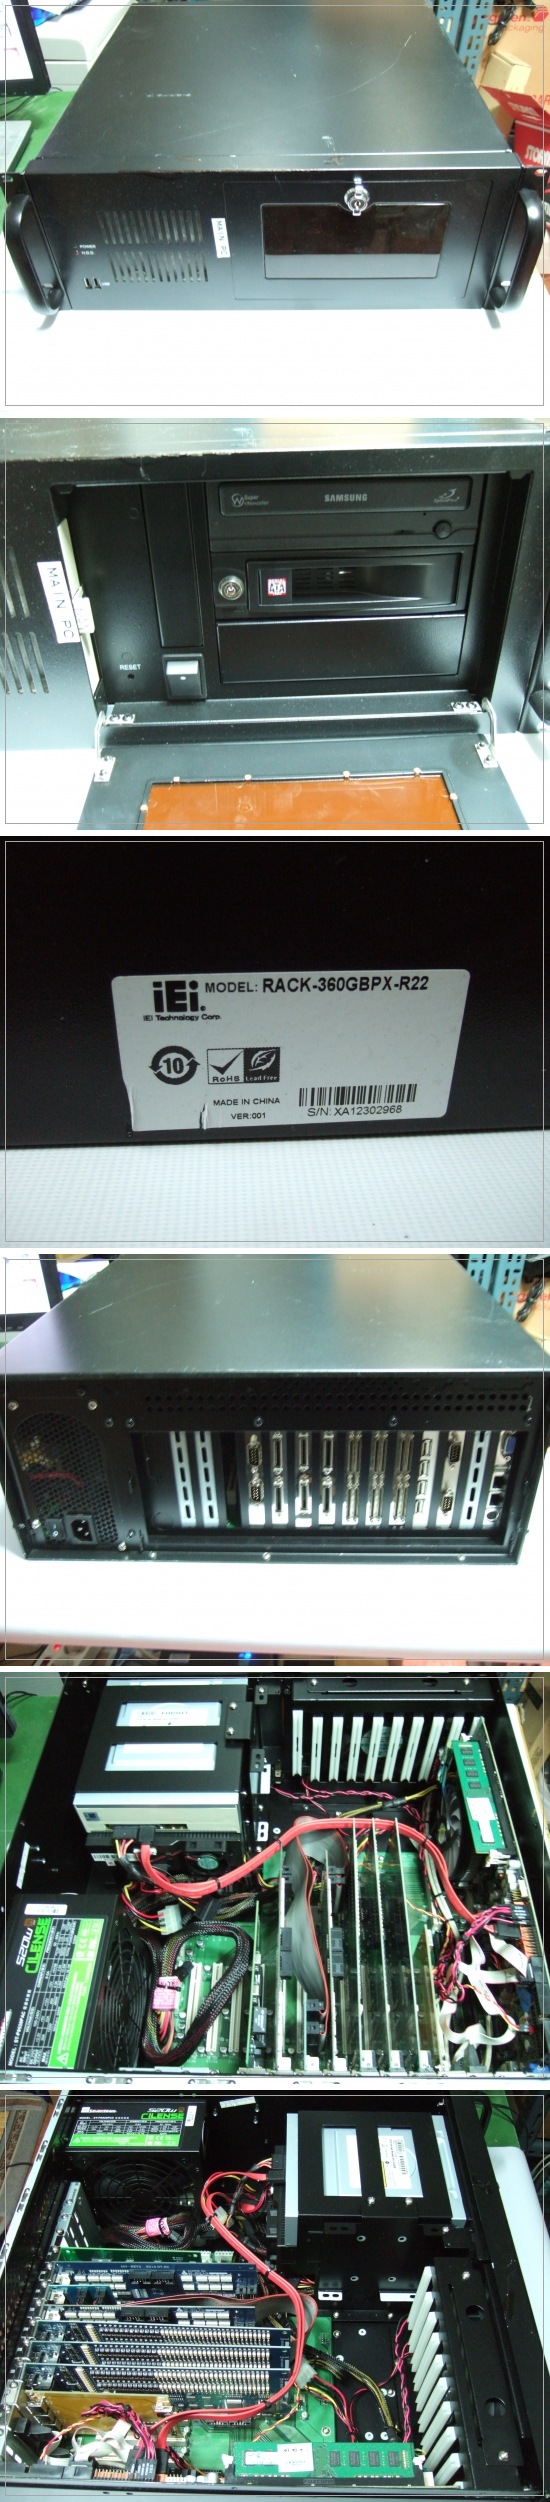 IEI RACK360GBPX-2.jpg